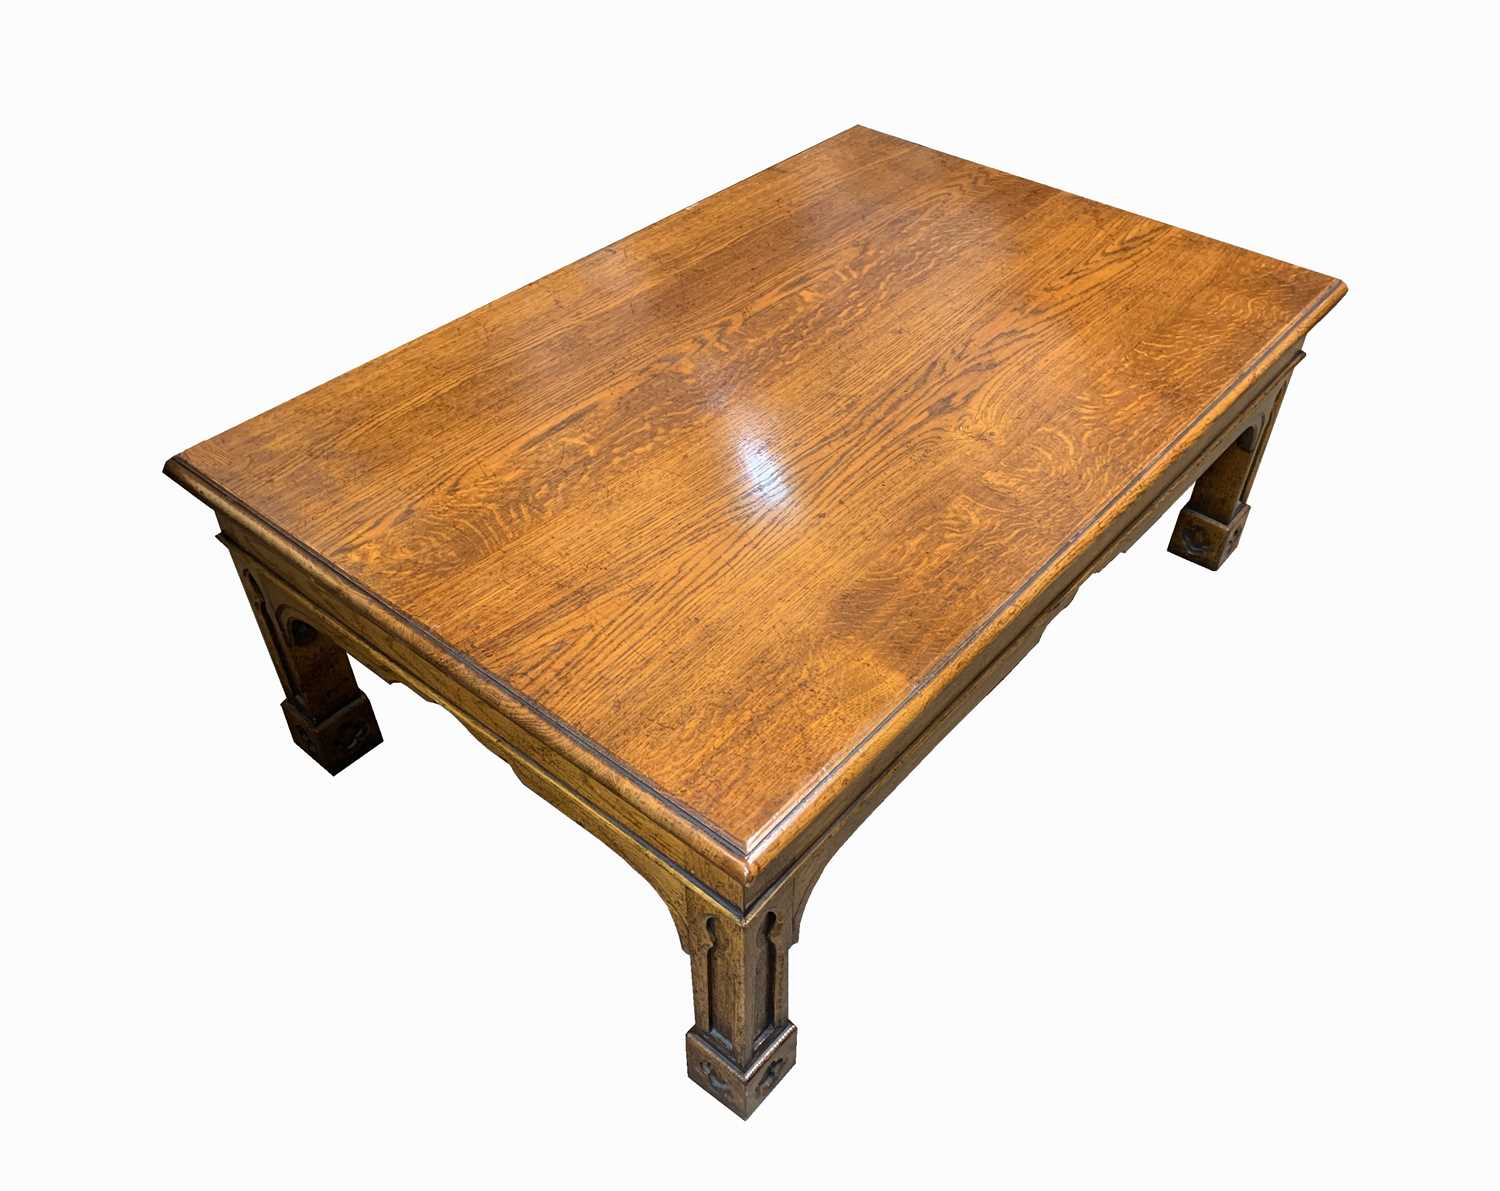 A Pugin design oak coffee table, 20th century, height 46cm, length 122cm, width 81cm.Condition